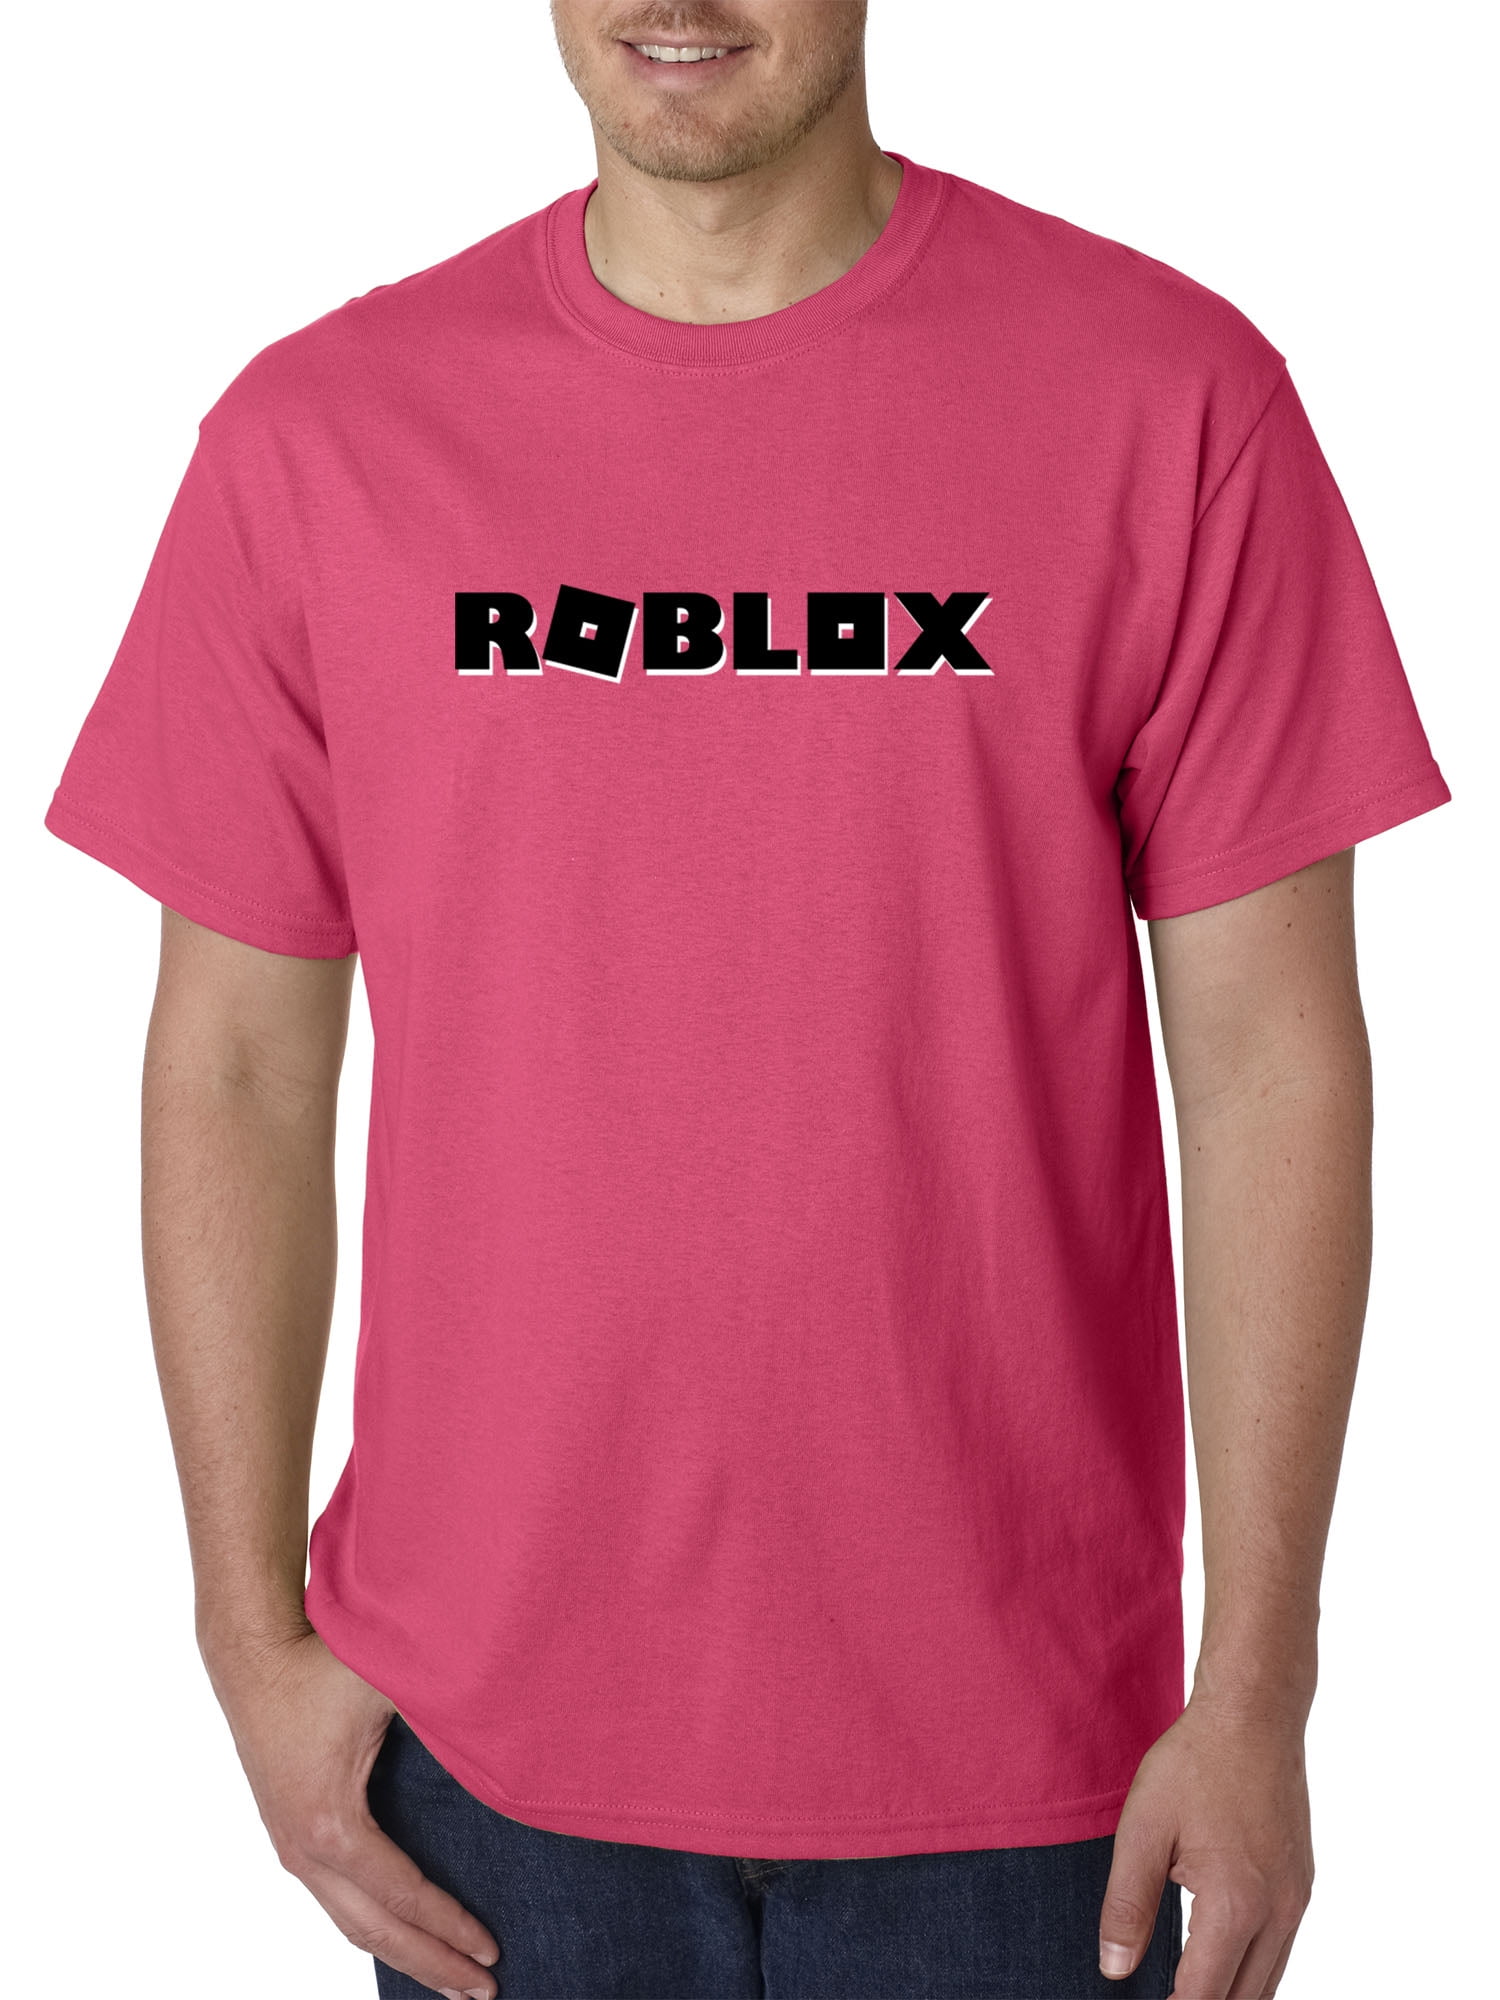 New Way New Way 1168 Unisex T Shirt Roblox Block Logo Game Accent 4xl Black Walmart Com Walmart Com - letter c shirt roblox